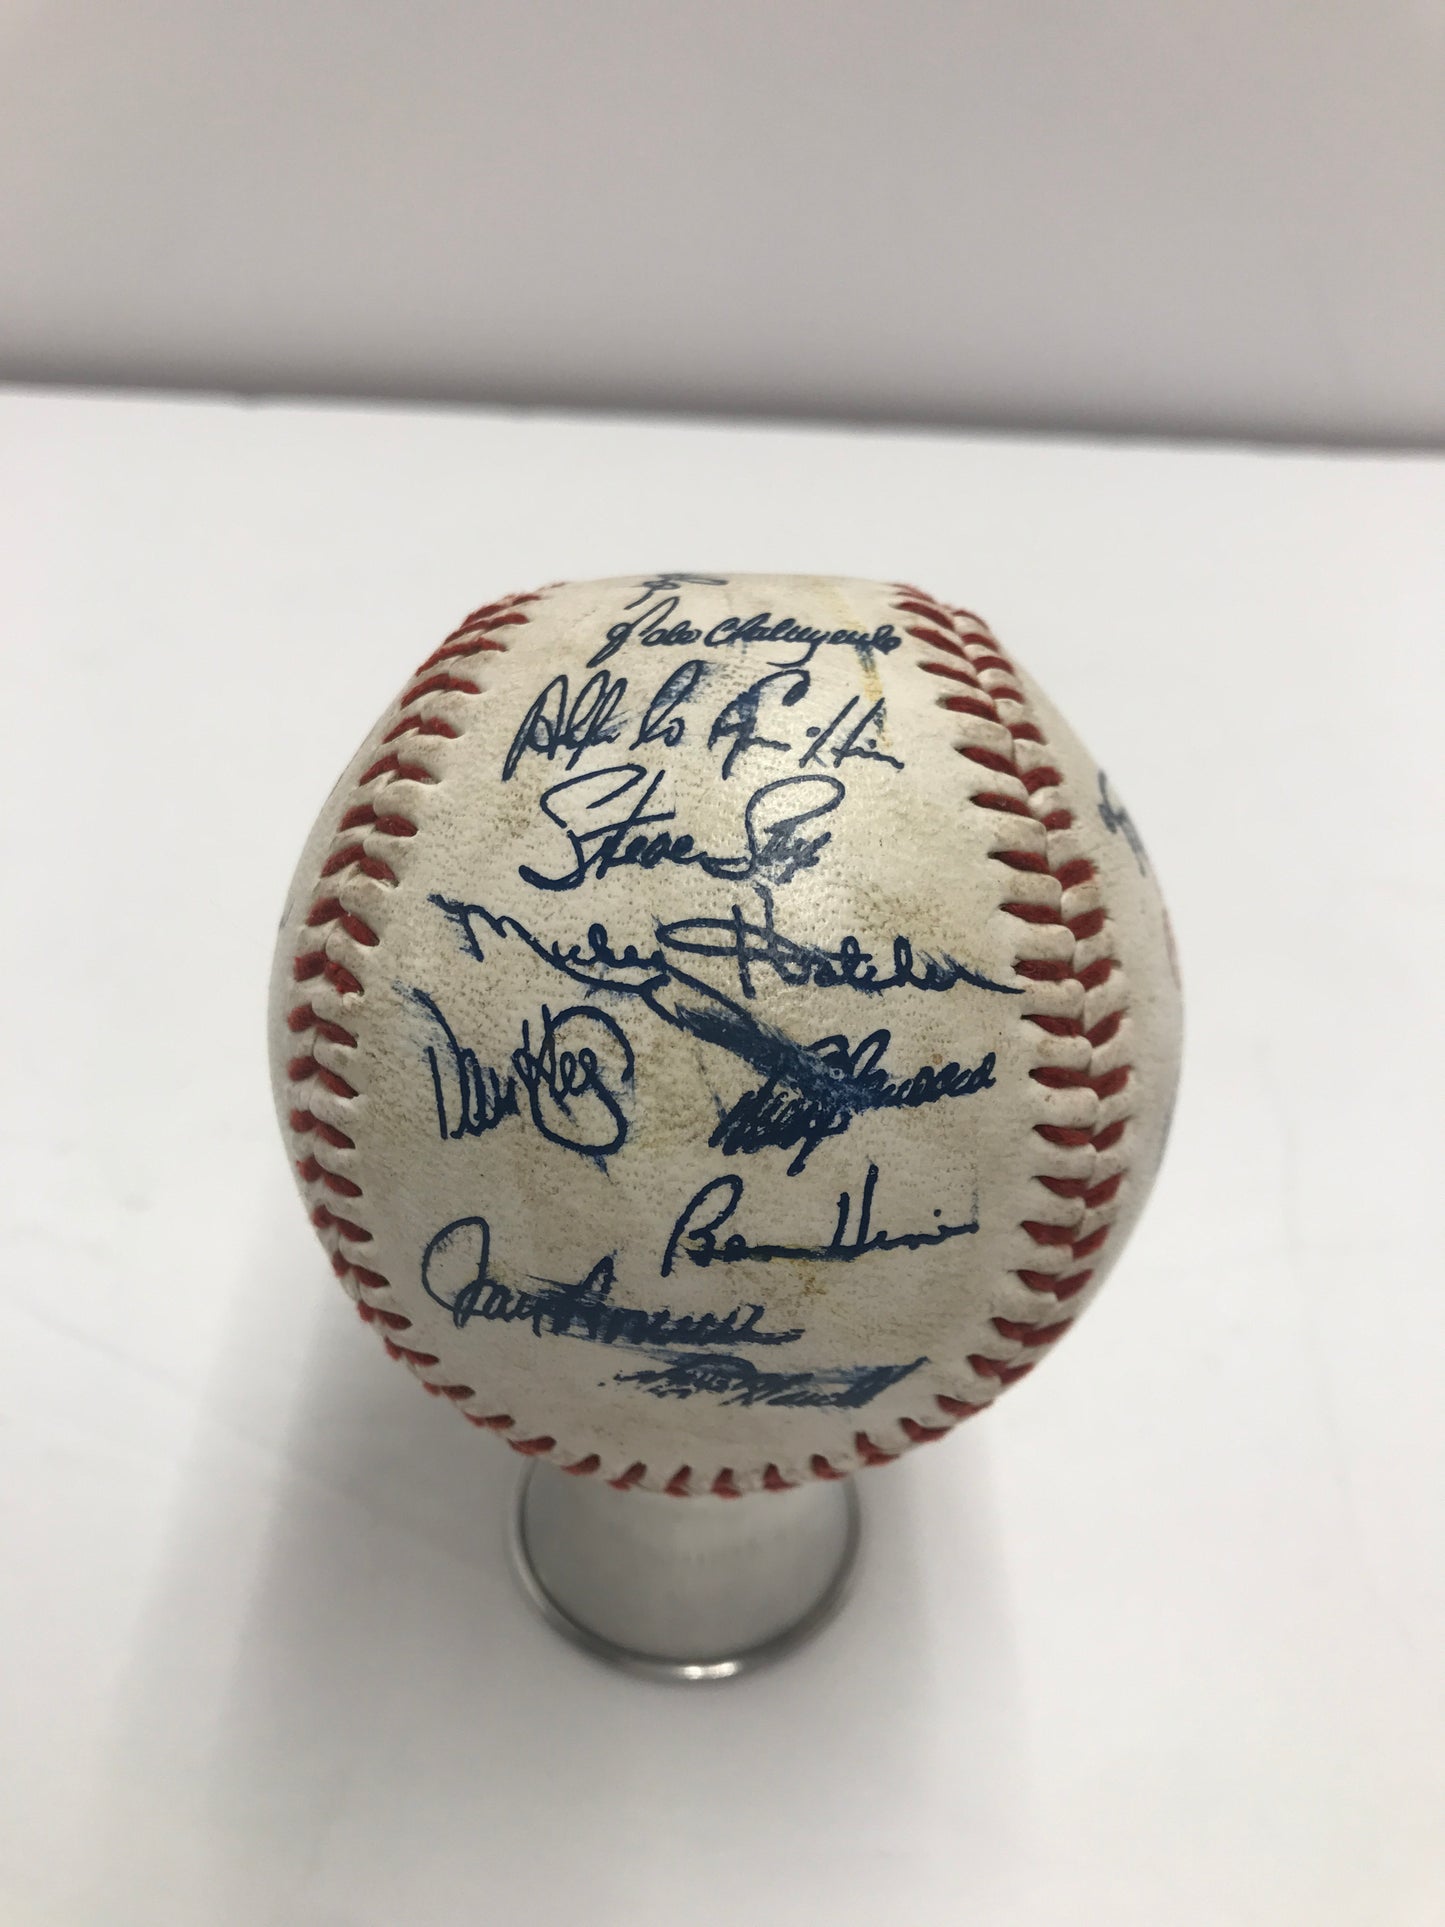 Los Angeles Dodgers Carnation Ice Cream Autographed Baseball